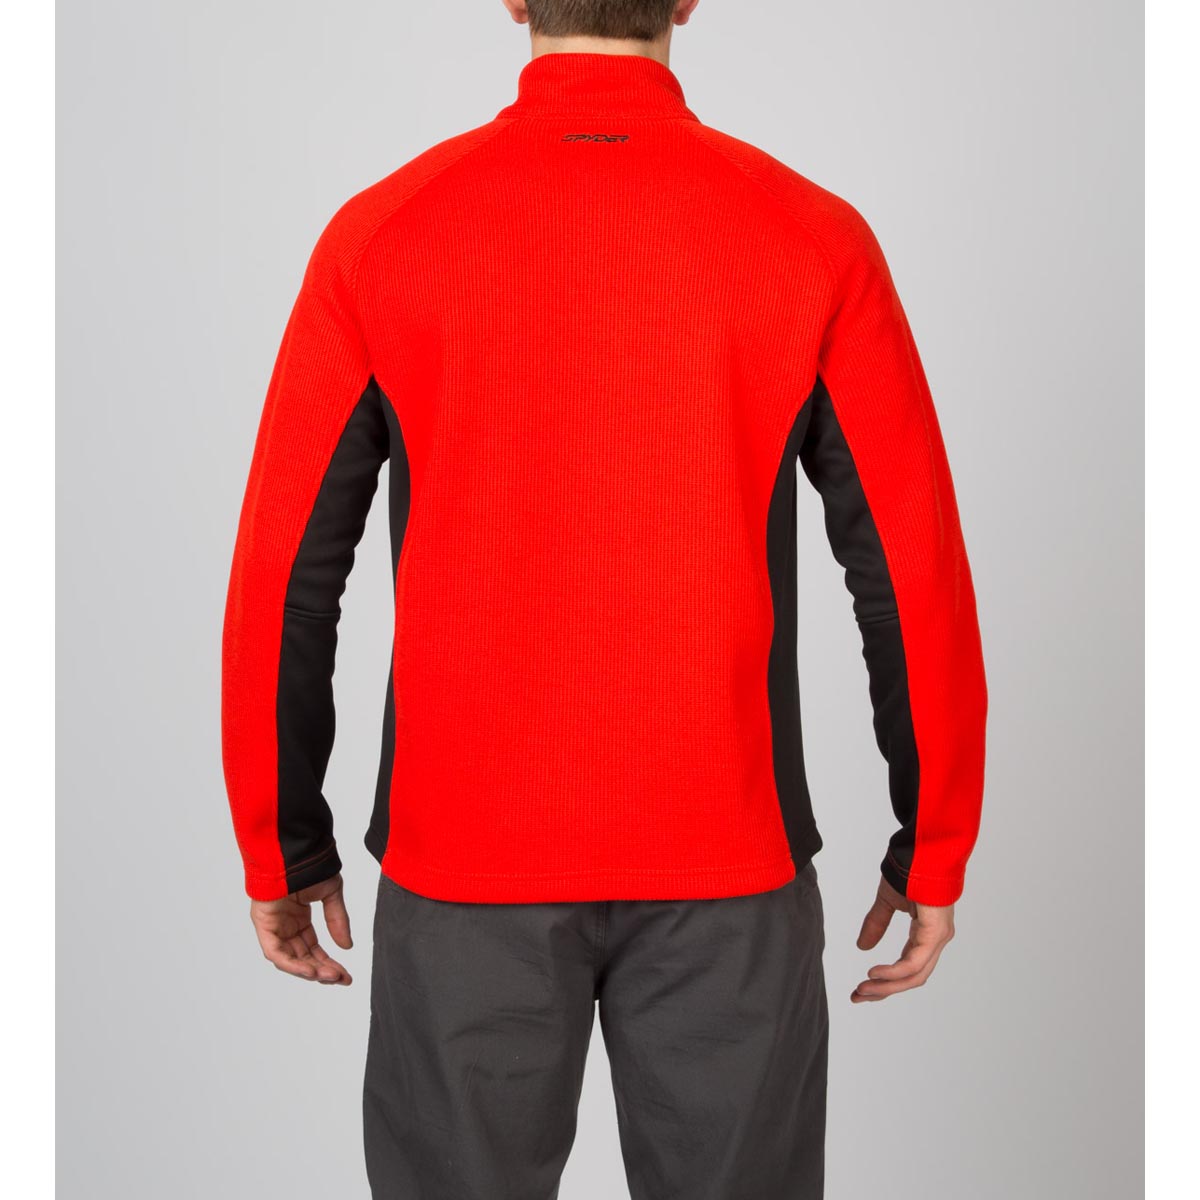 Spyder Mens Outbound Half Zip Mid Weight Core Sweater